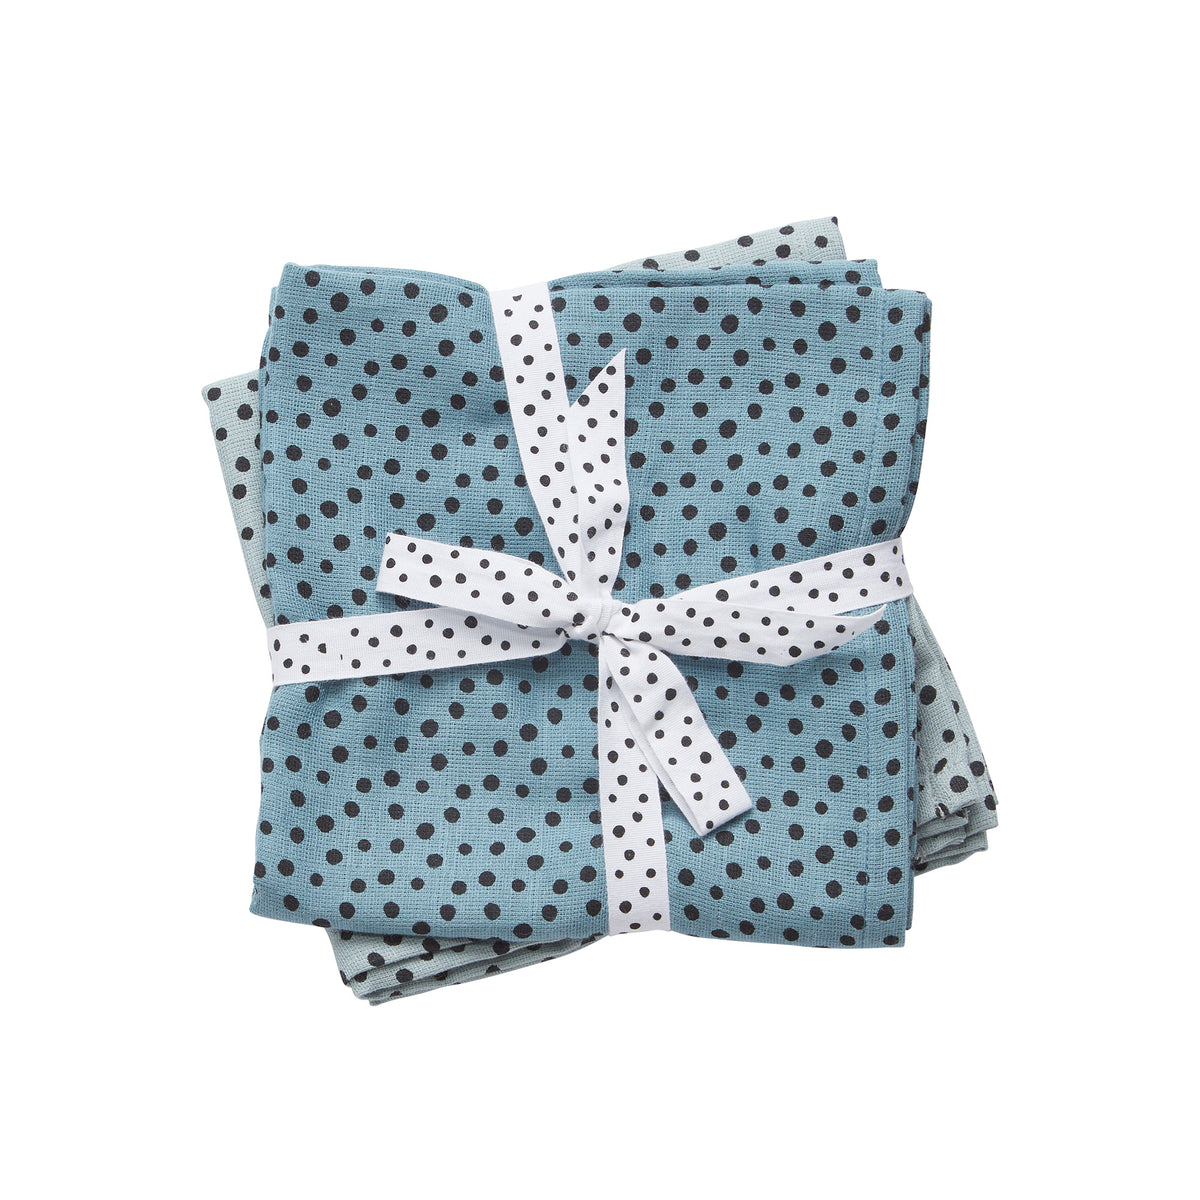 Burp cloth 2-pack - Happy dots - Blue - Front